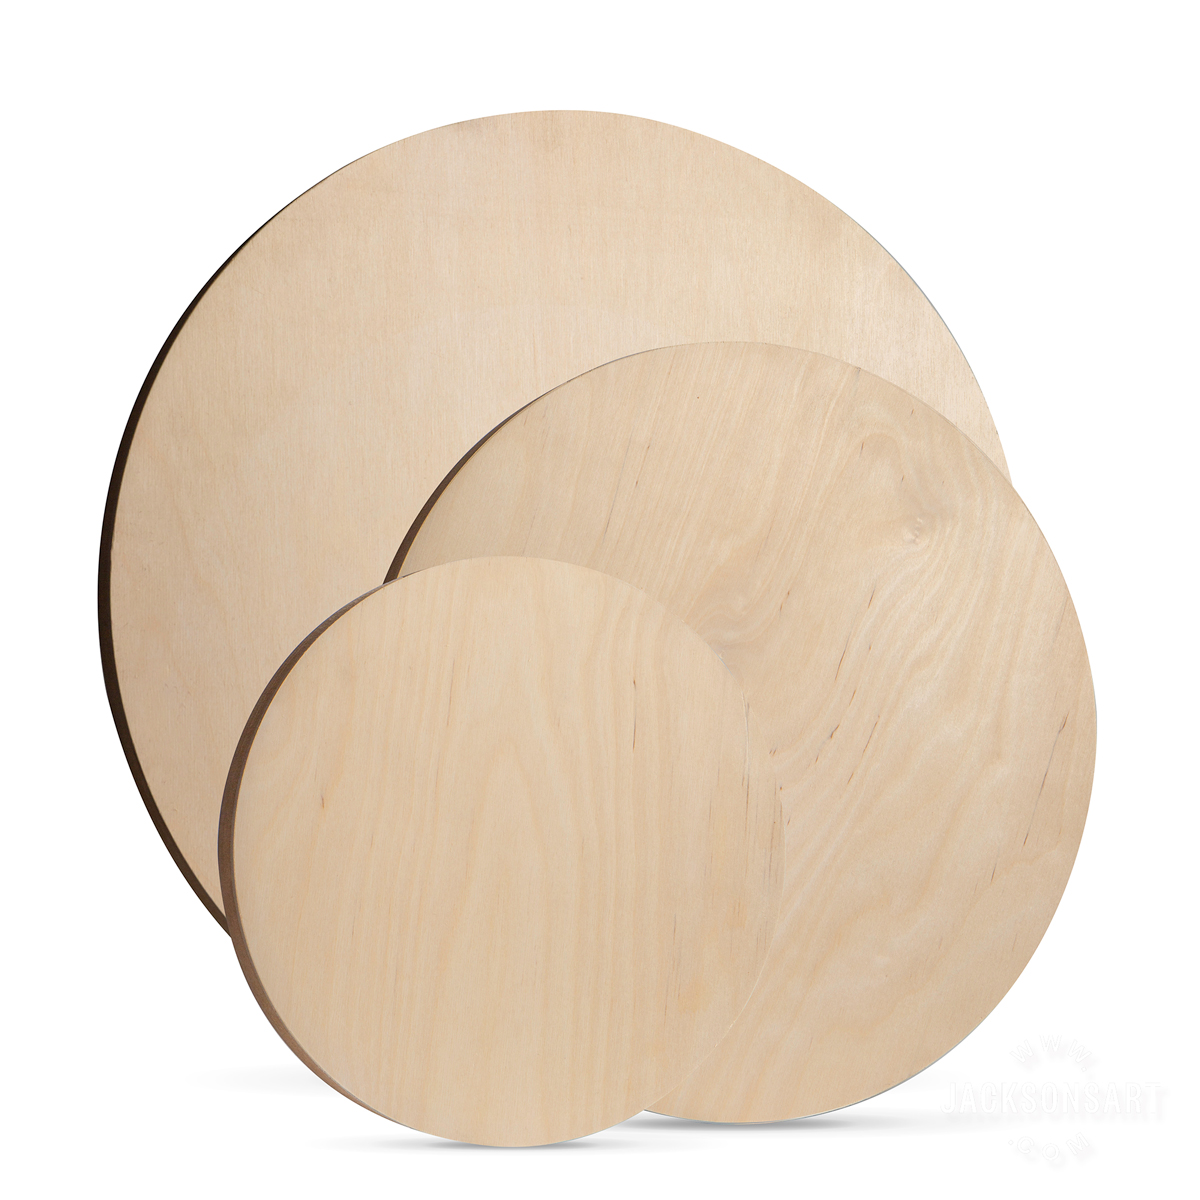 Jackson's Circular Plywood Panels new products